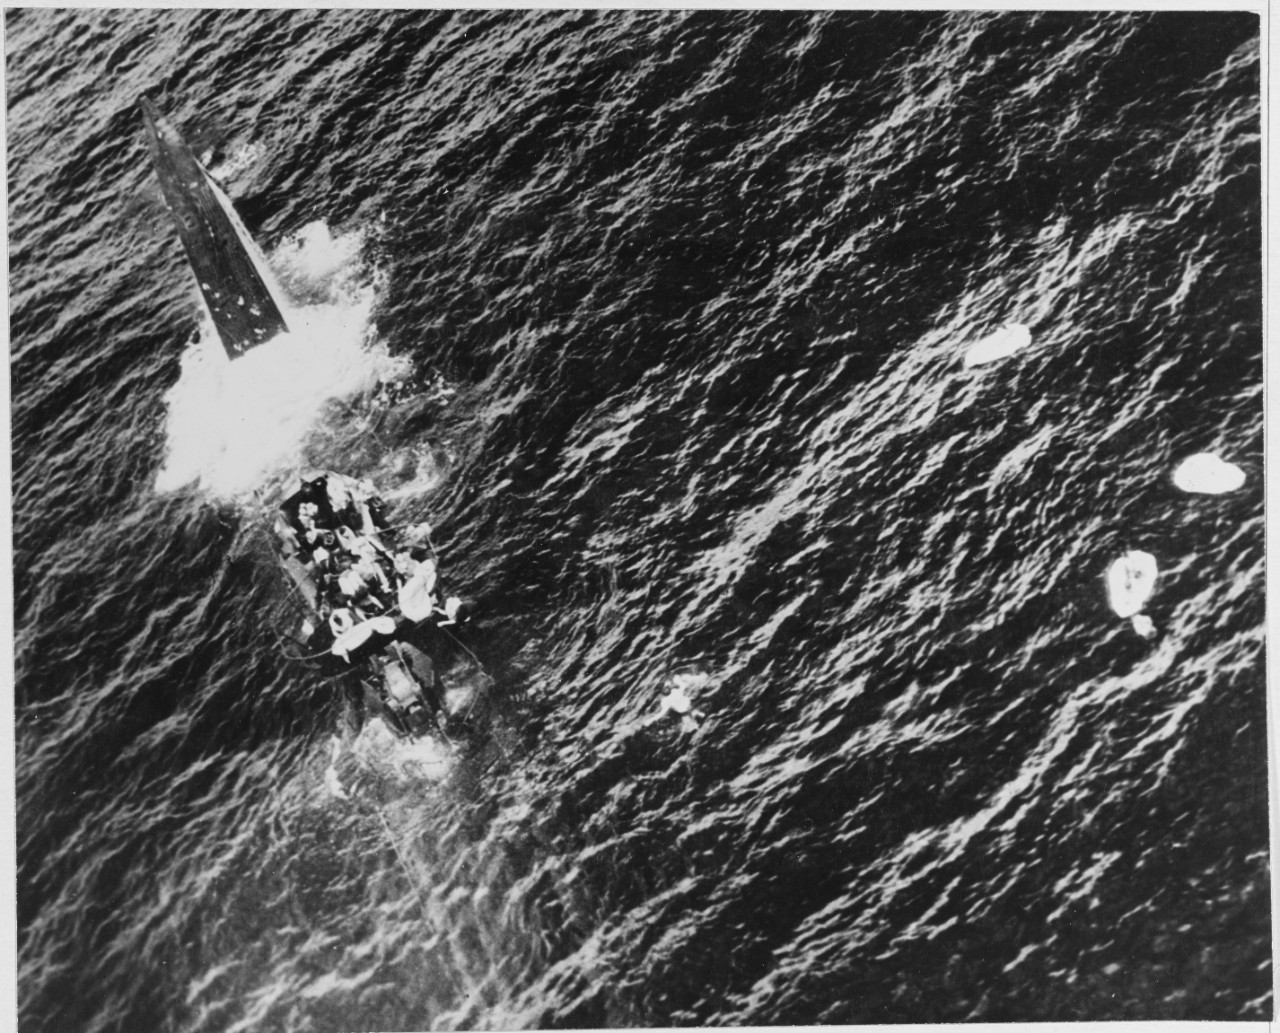 USS CARD (CVE-11) sets sub destruction record